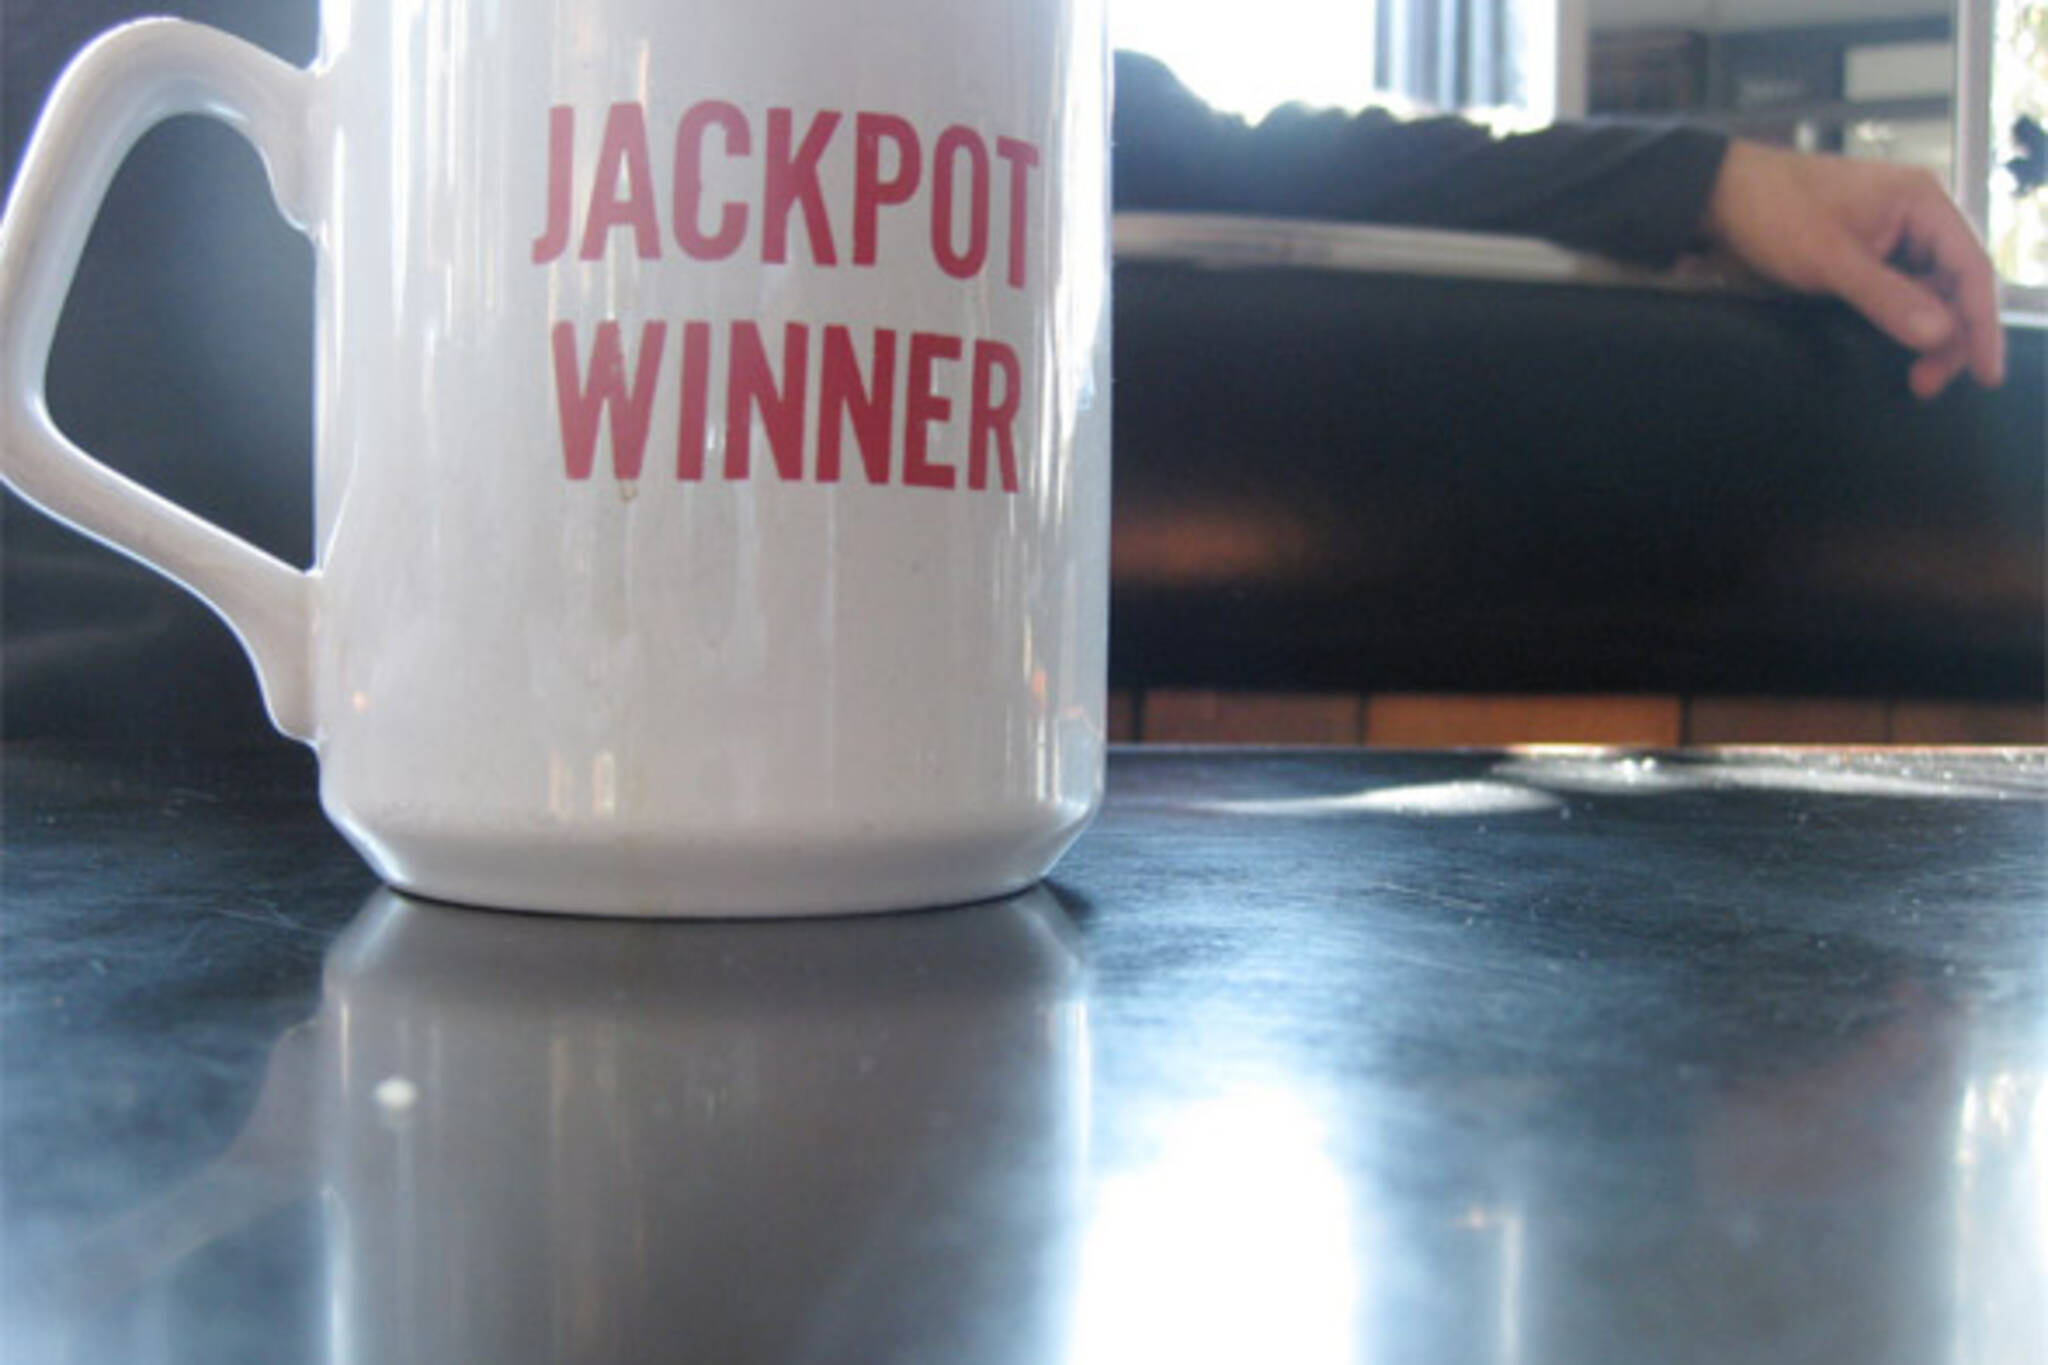 jackpot winner mug